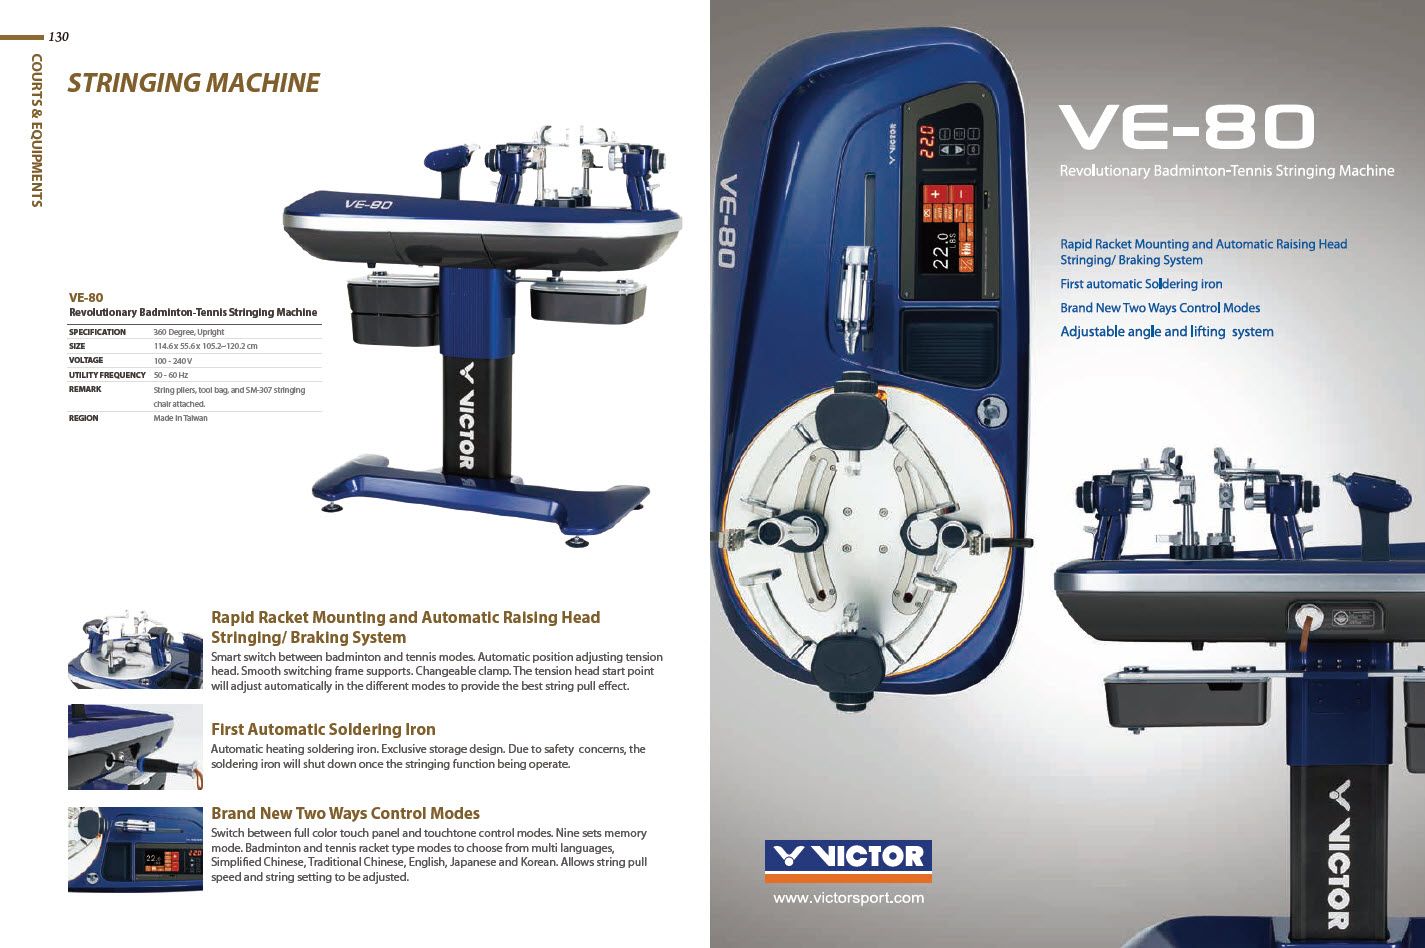 VICTOR catalog 2014